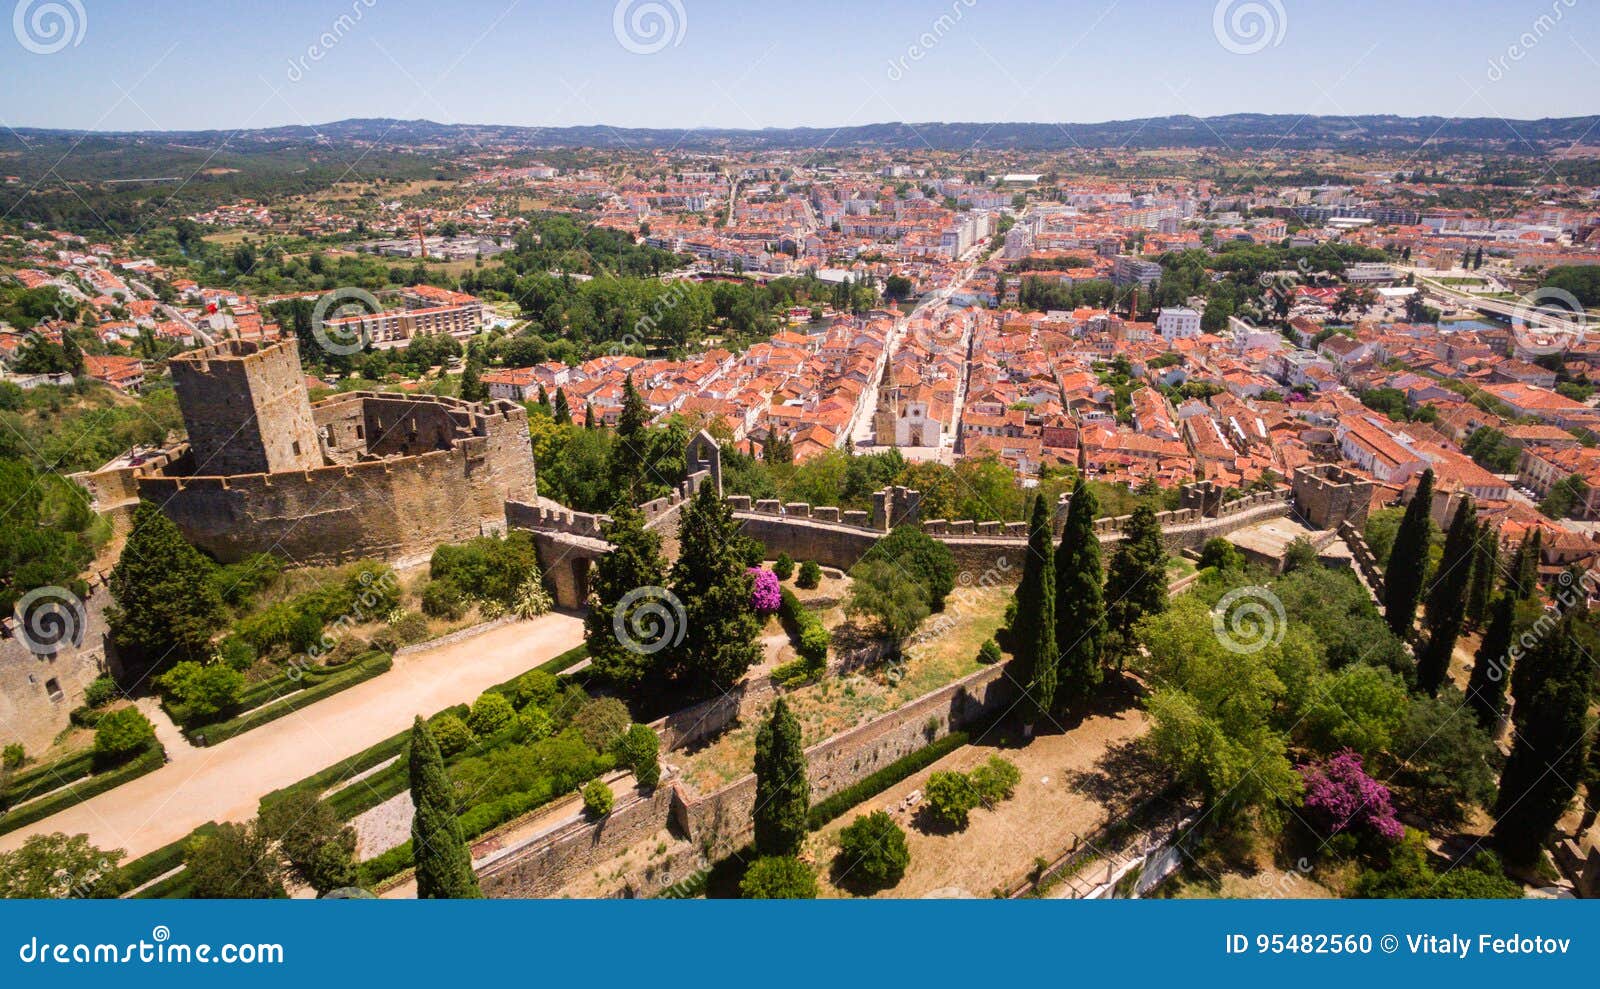 aerial panoramic view of the city of tomar fron monastrty convento de cristo